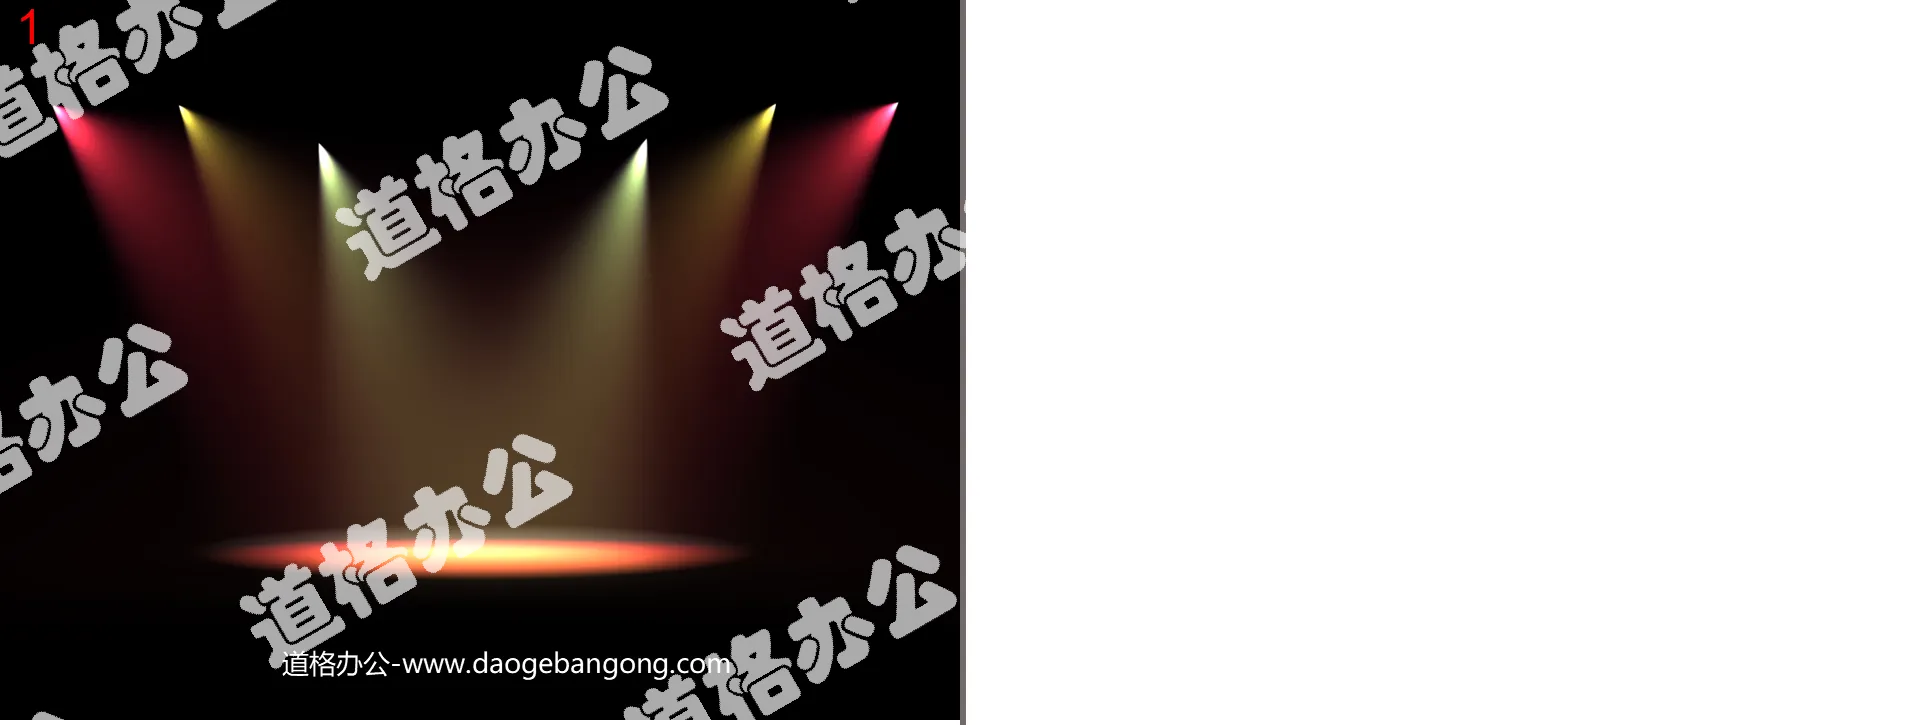 Light stage slideshow background image